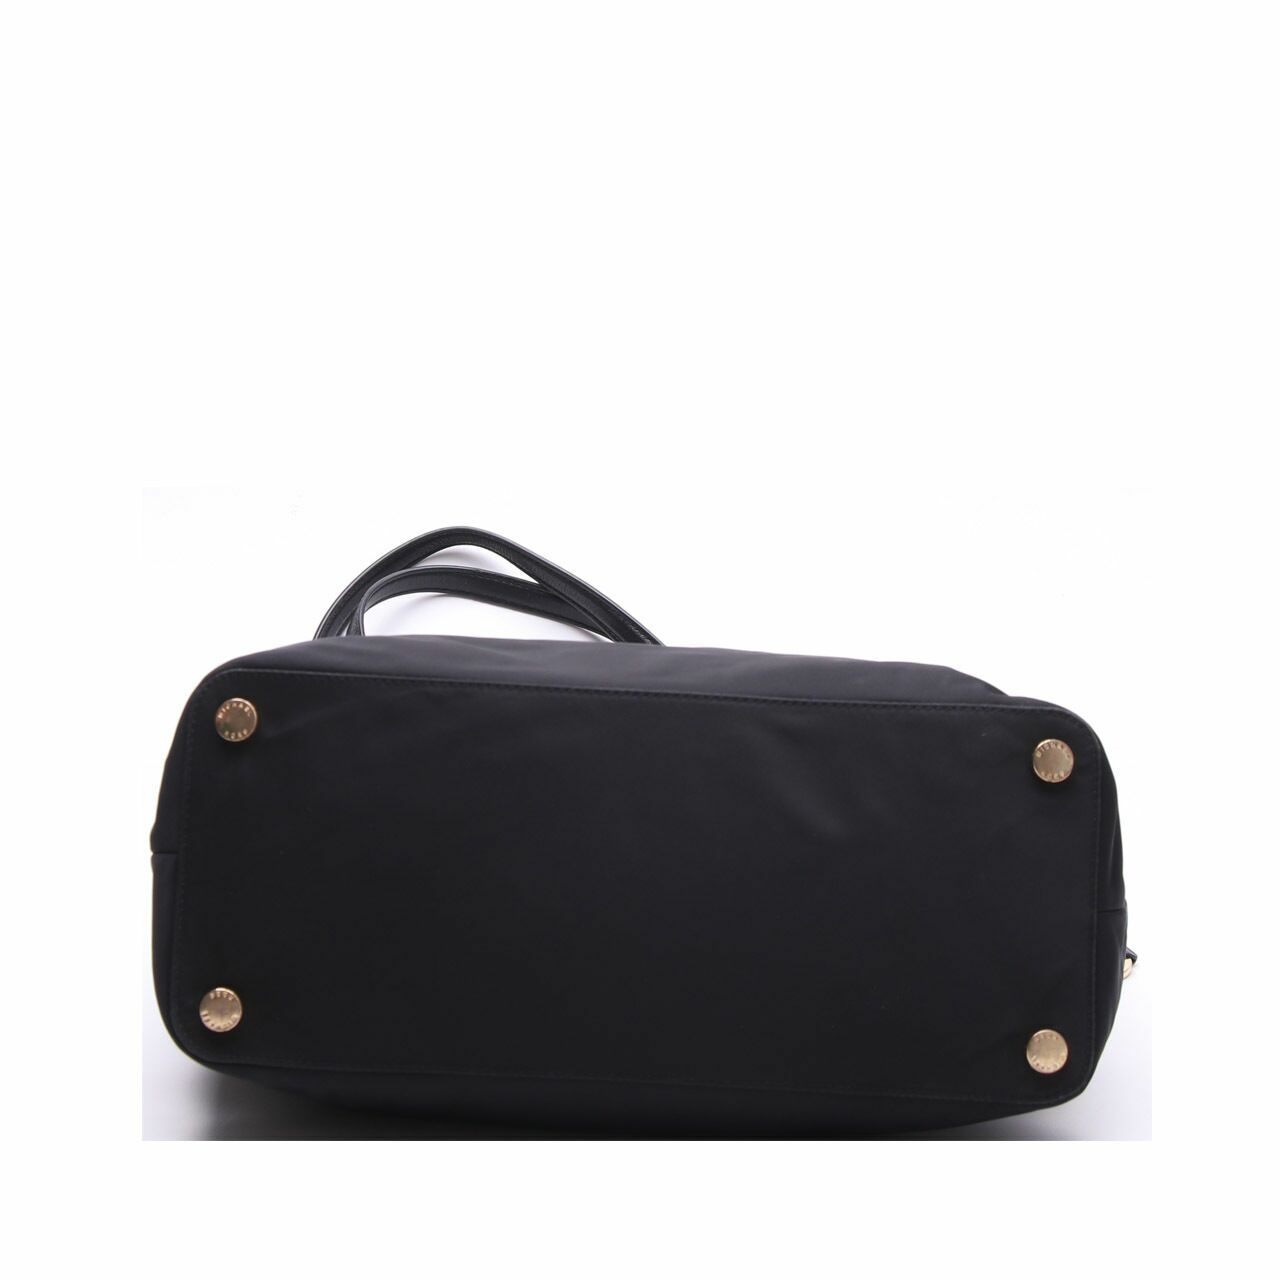 Michael Kors Black Nylon Morgan Large Tote Bag